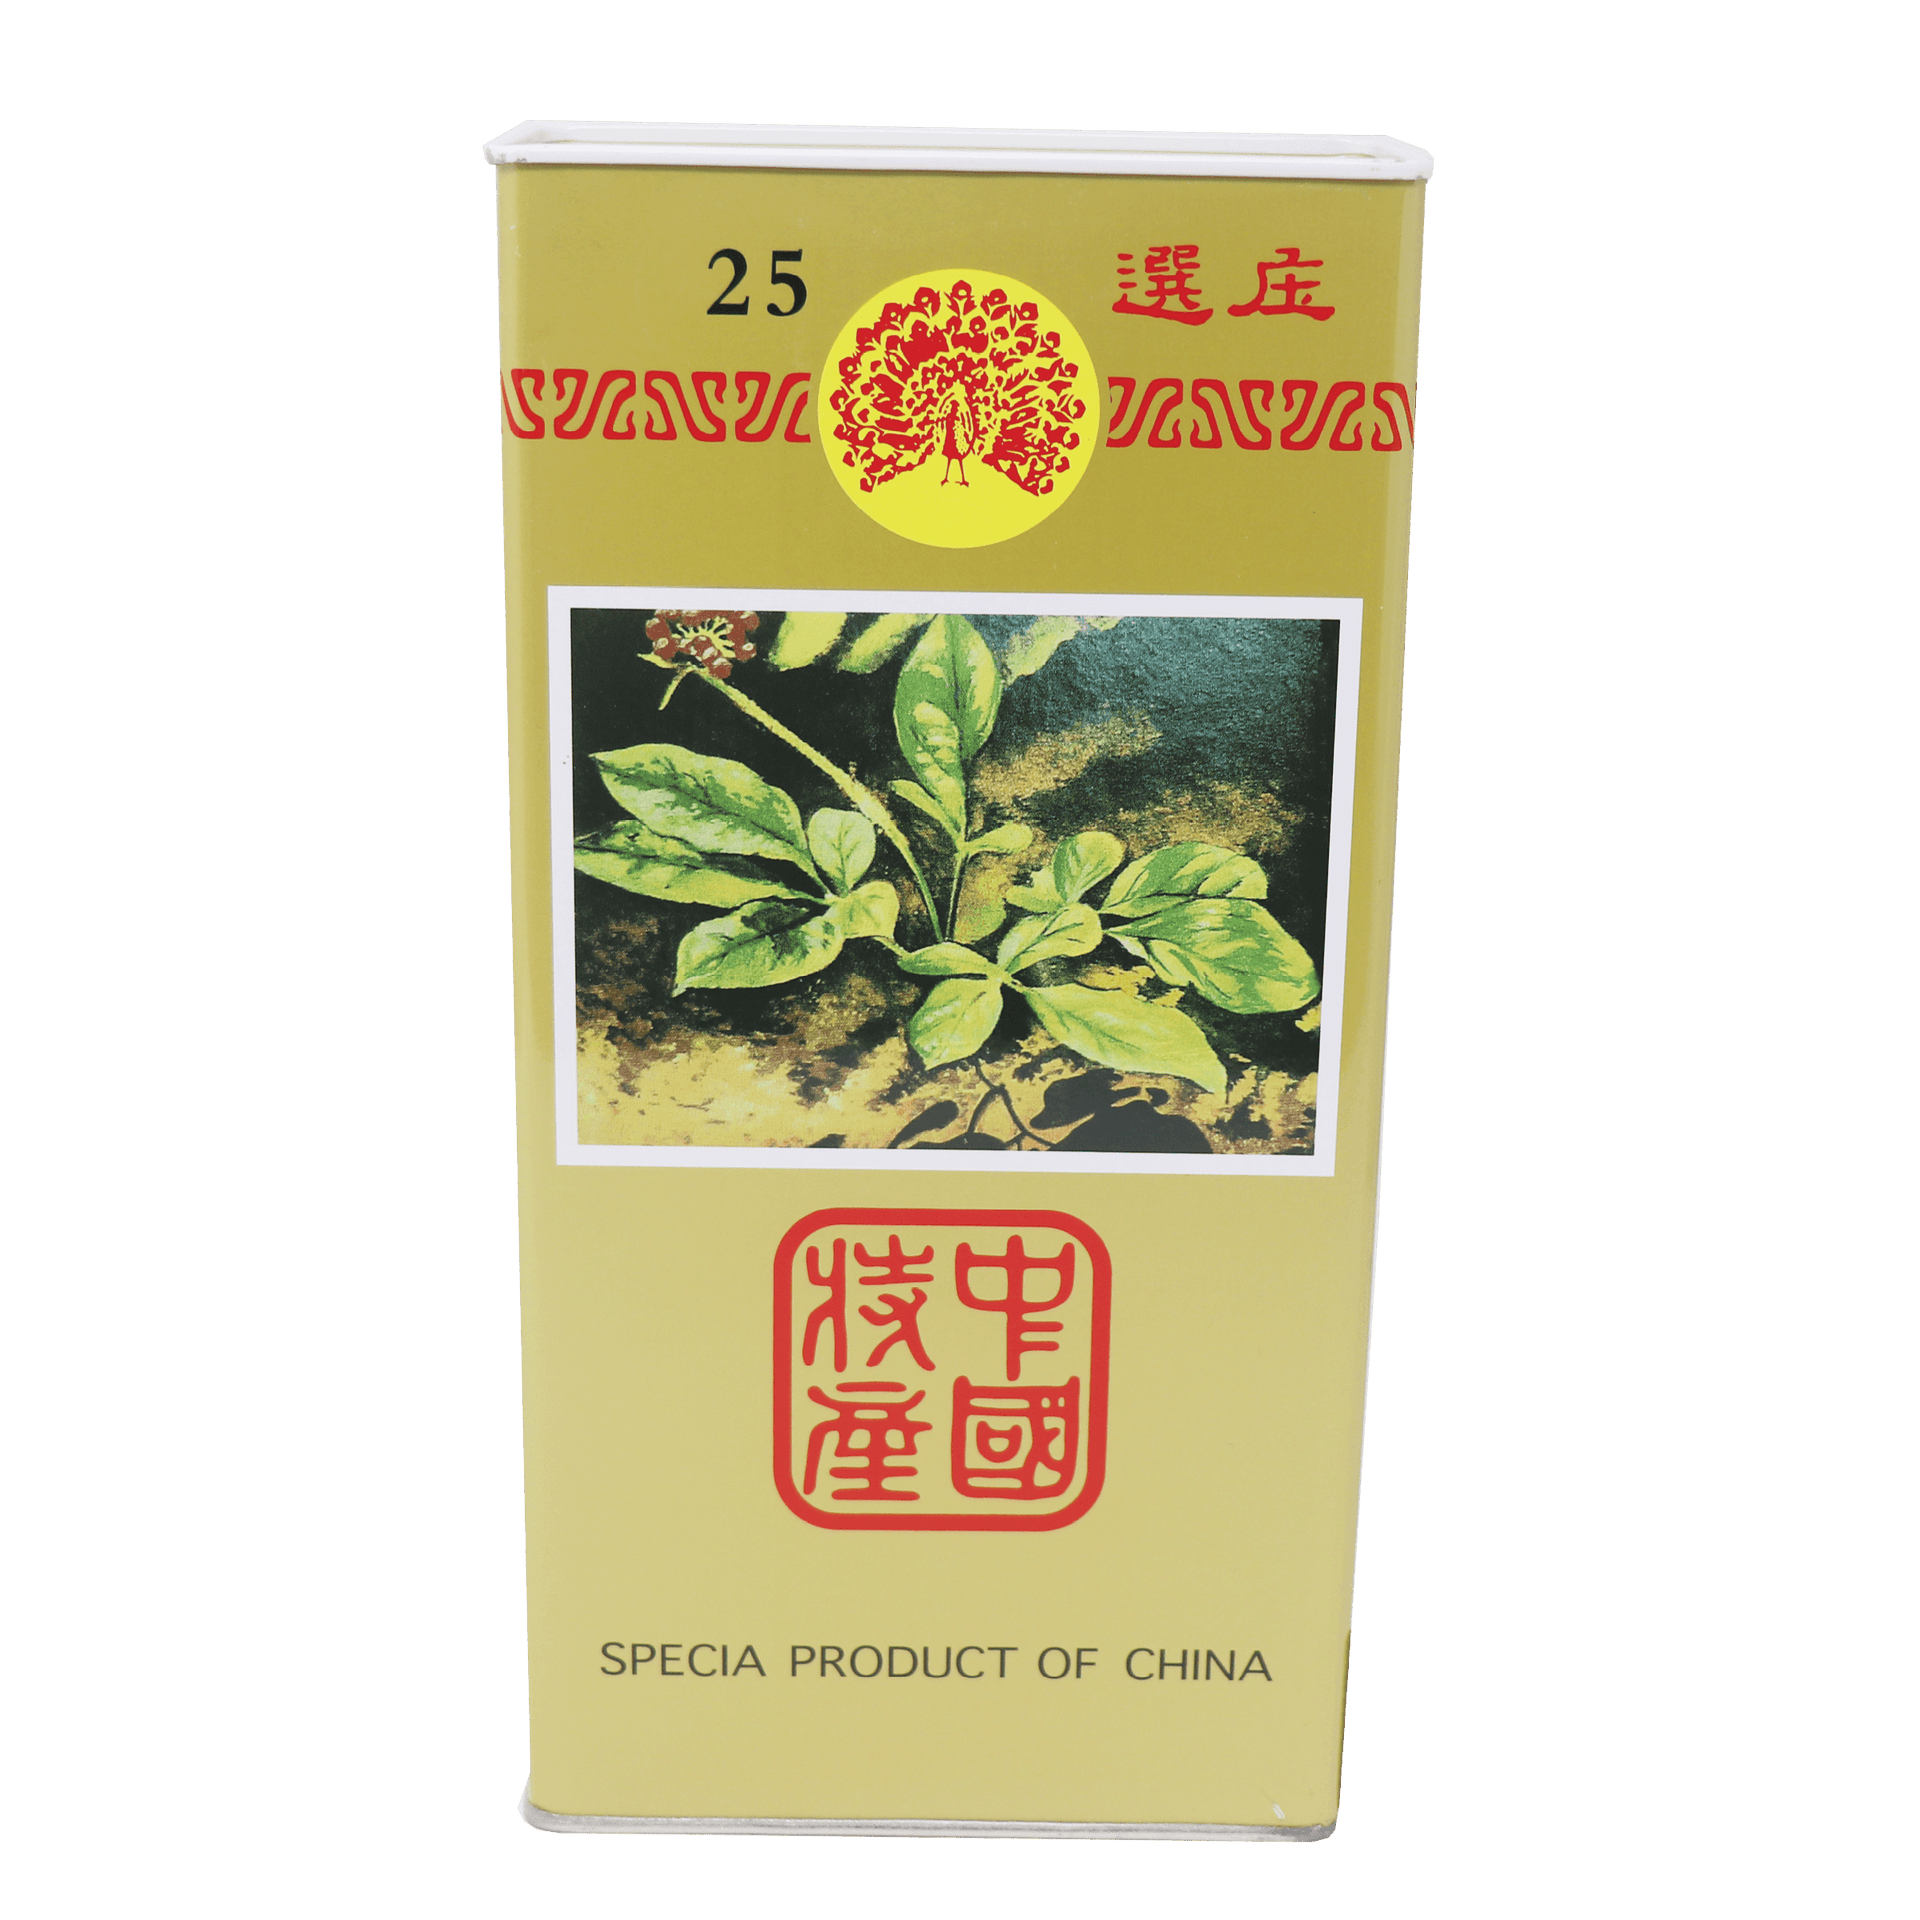 SHIH CHU Chinese GINSENG Medium Size (25pieces/600g) - Buy at New Green Nutrition